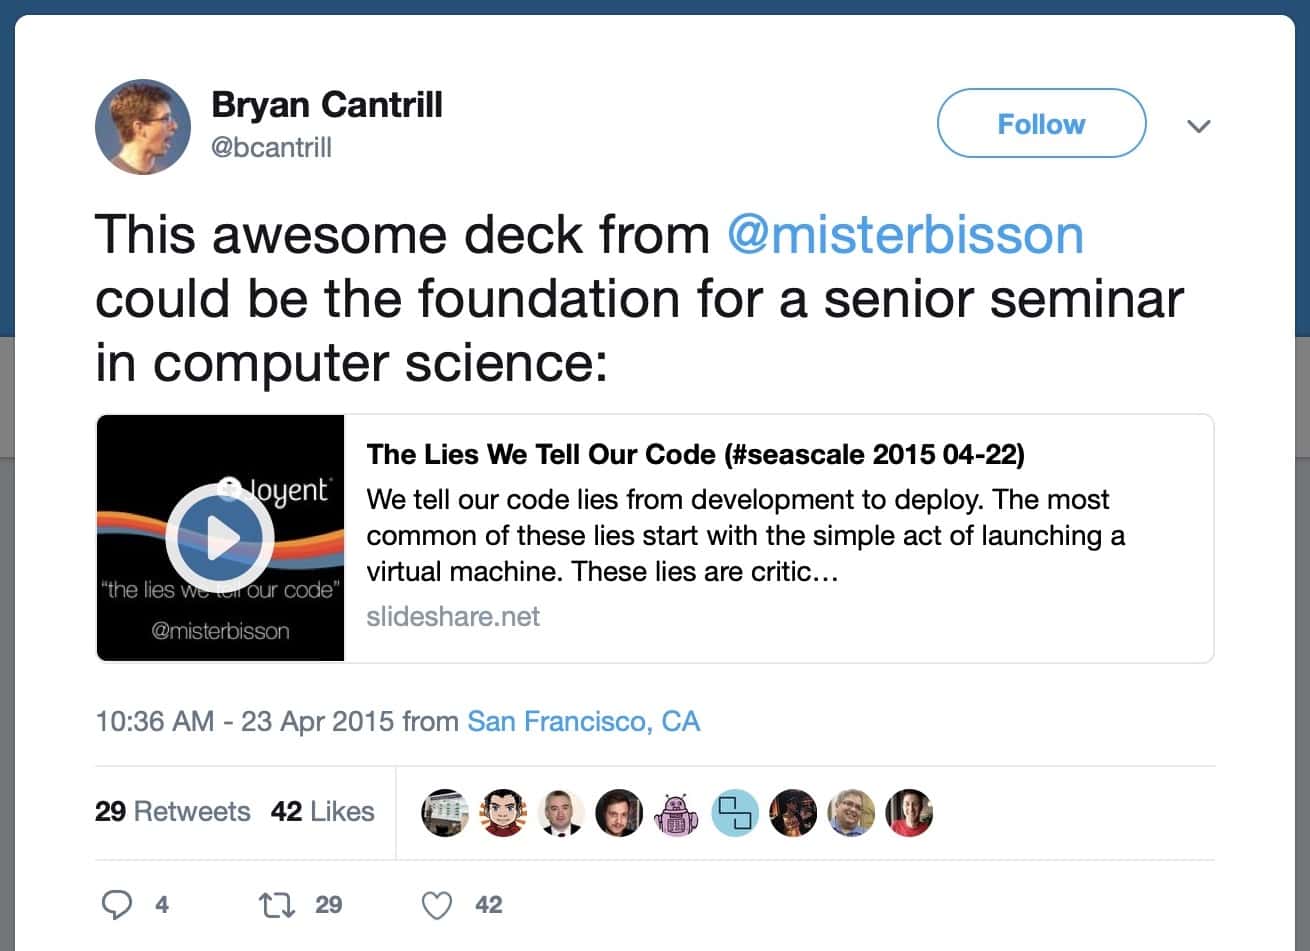 Bryan Cantrill's tweet describing the talk.